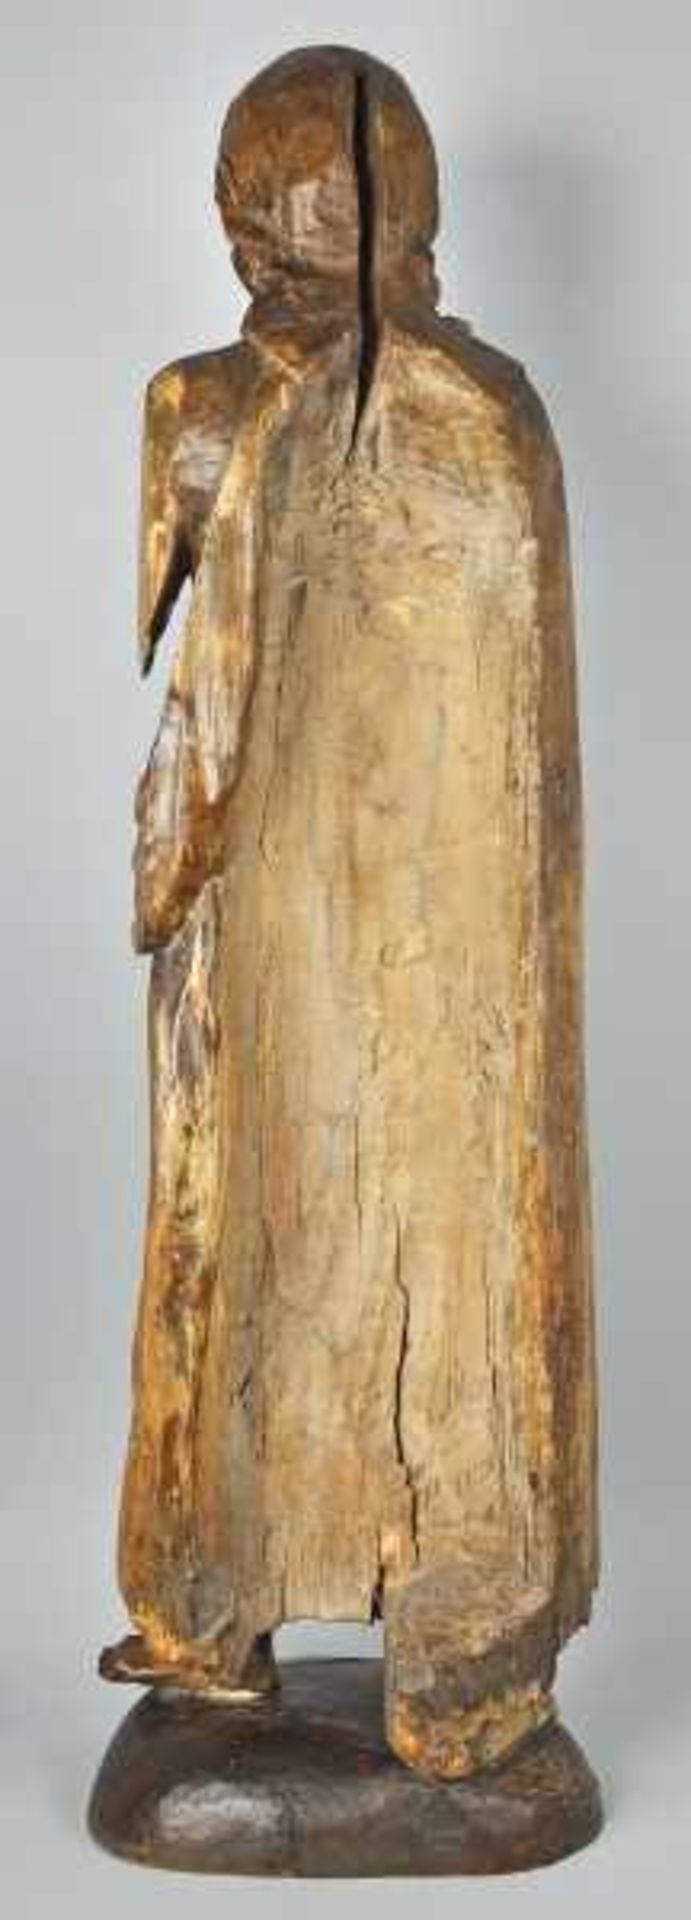 CHRISTUS 3/4 rund geschnitzte Holzfigur, Rückseite gehöhlt, 17./18.Jh, auf späterer ovaler Basis, - Image 7 of 7